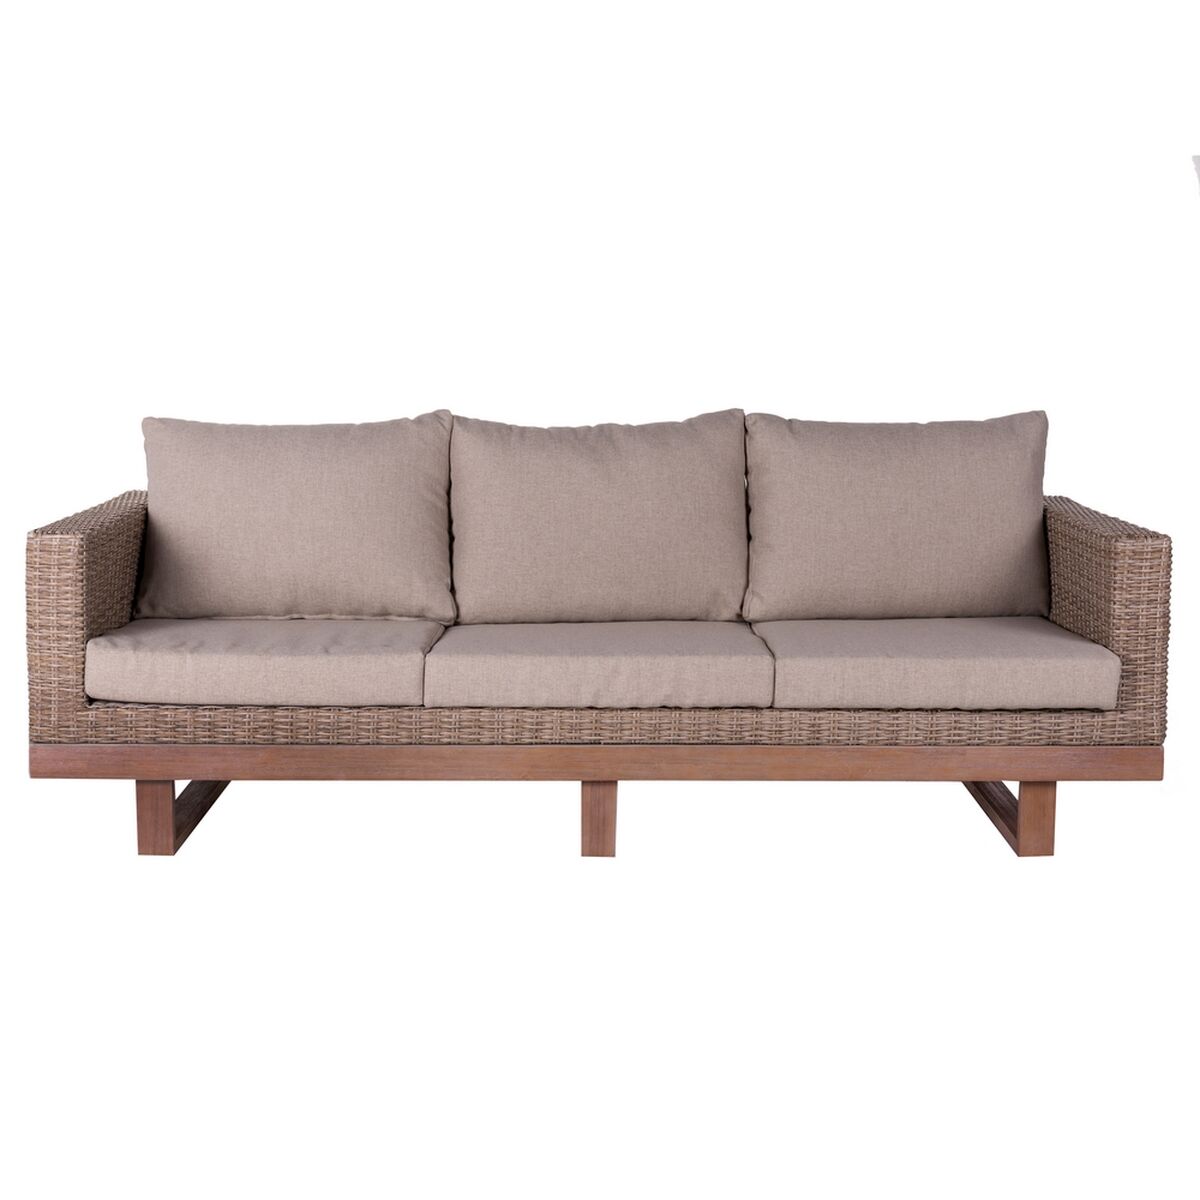 Garden sofa Patsy 220 x 89 x 64,50 cm Wood Rattan